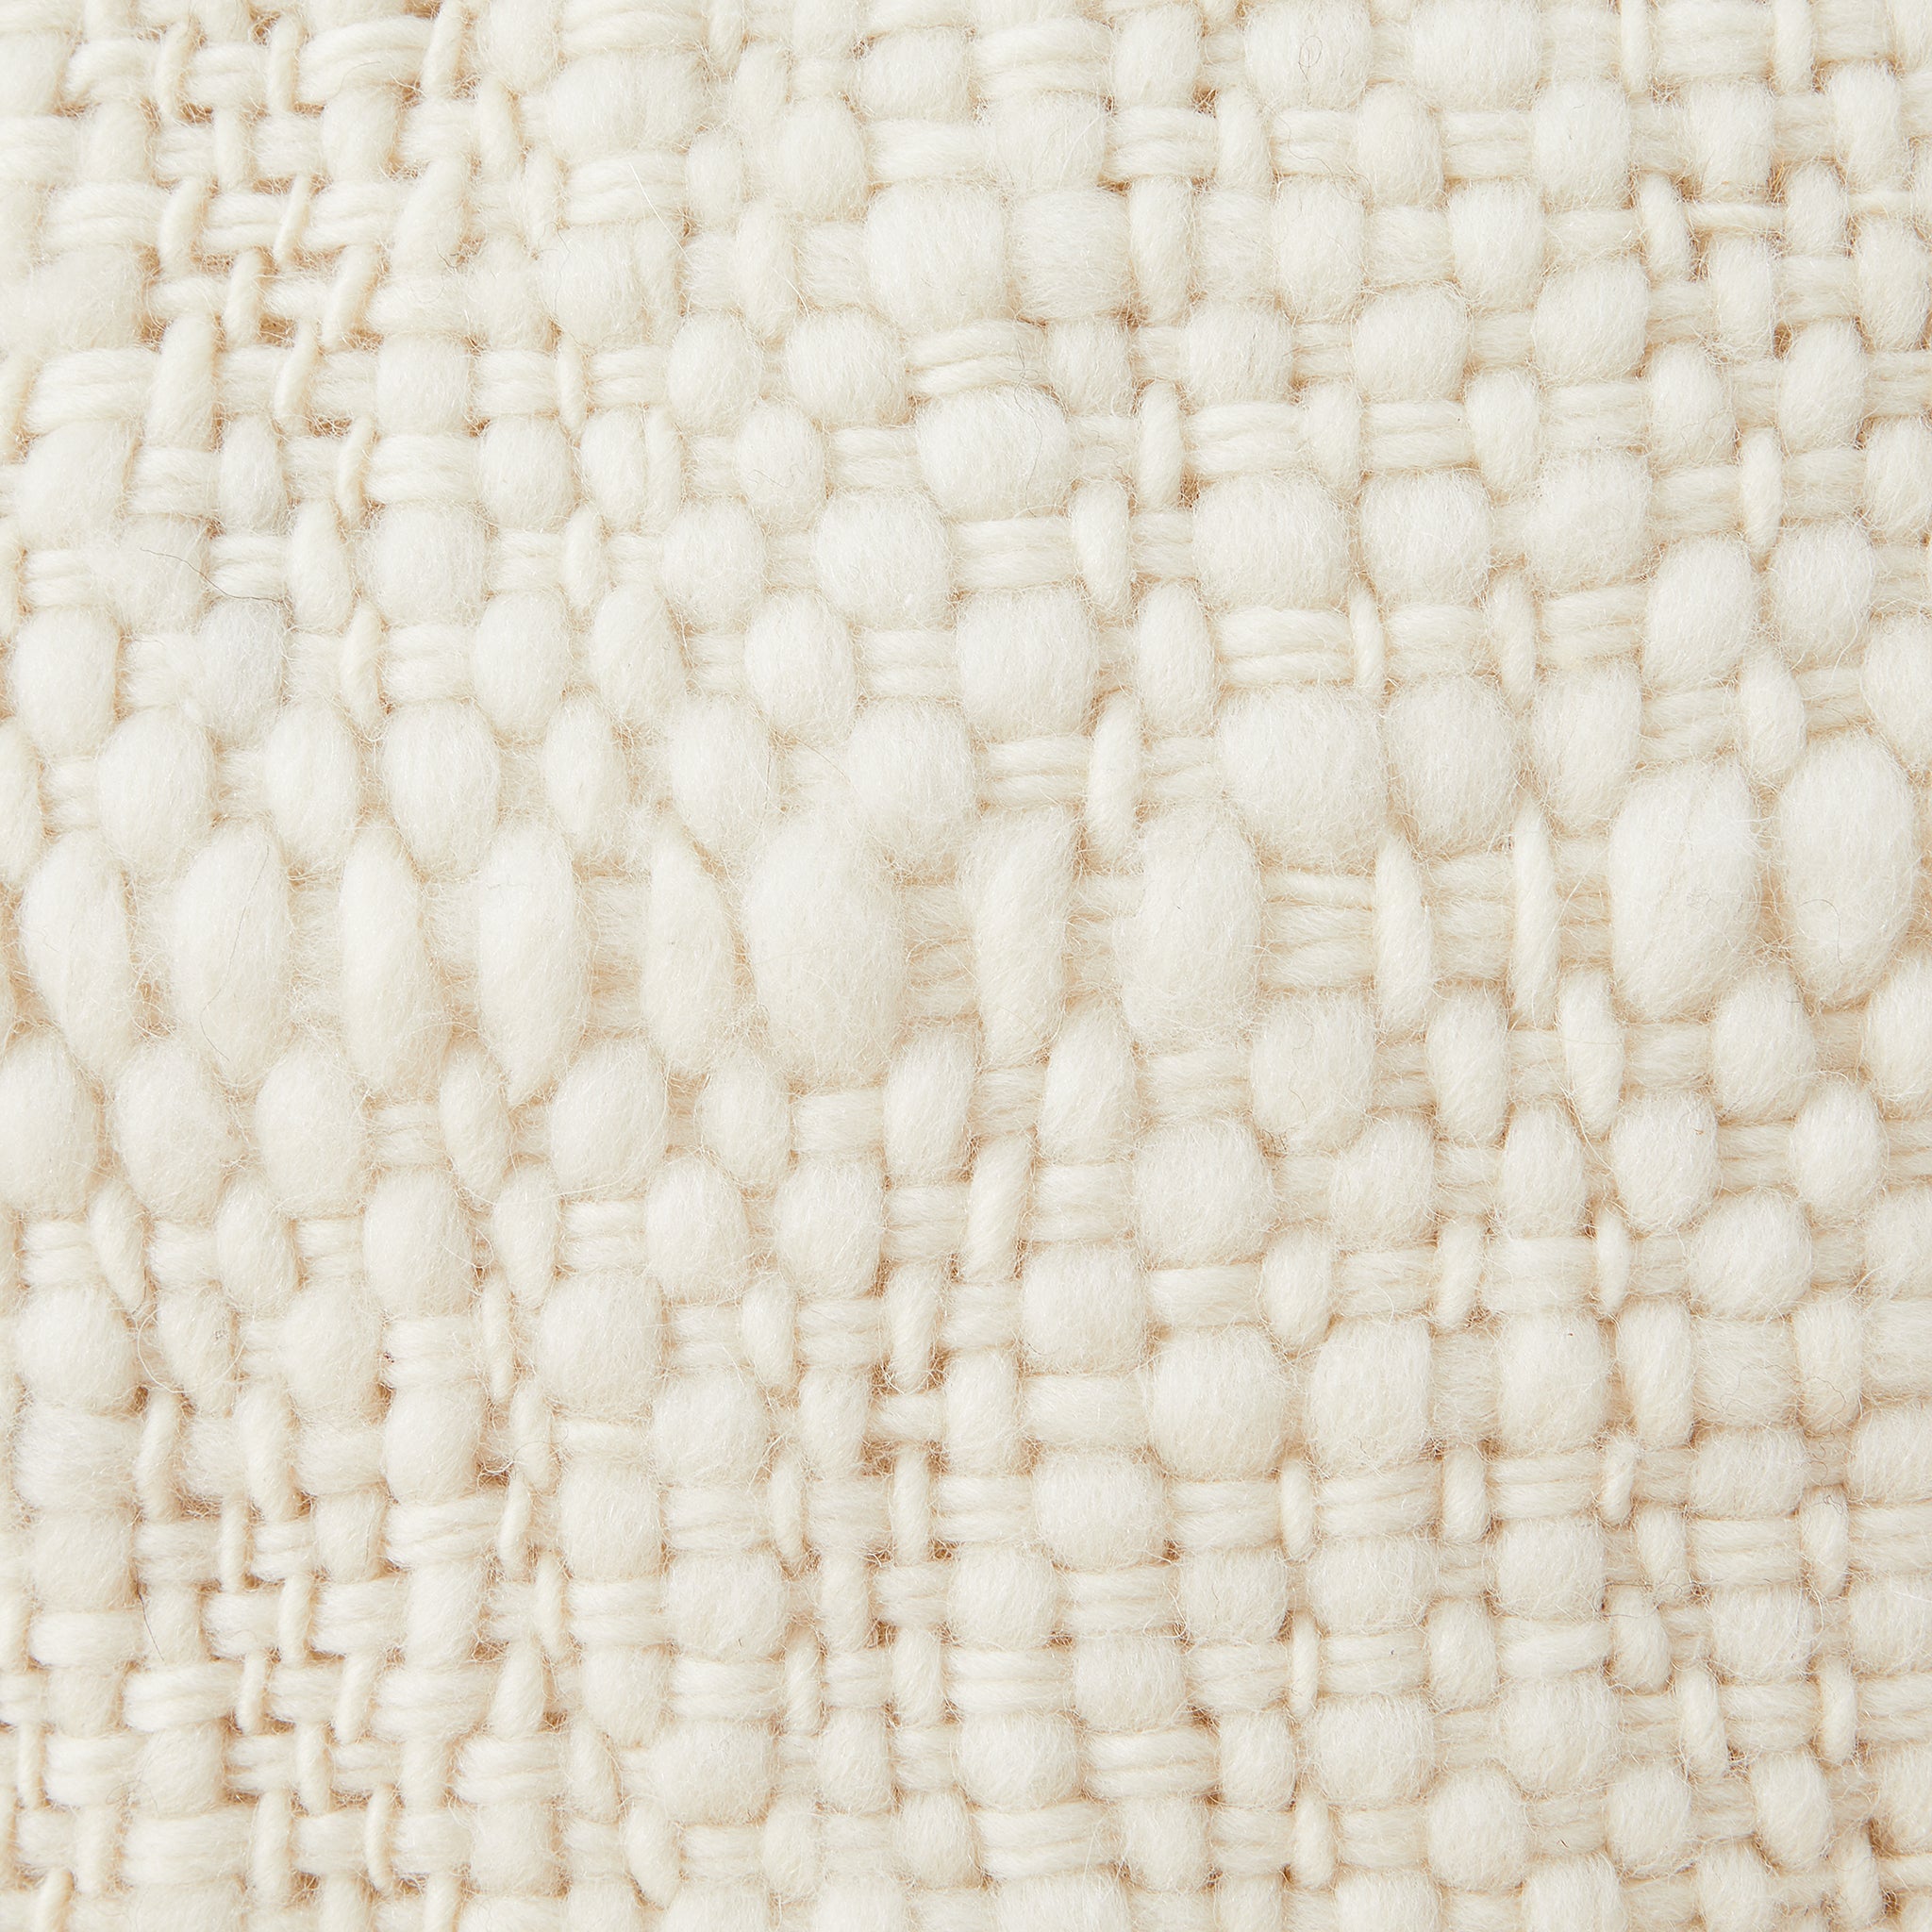 Fabric Close Up. Hand-woven cushion "Sueno", 50x50cm, natural